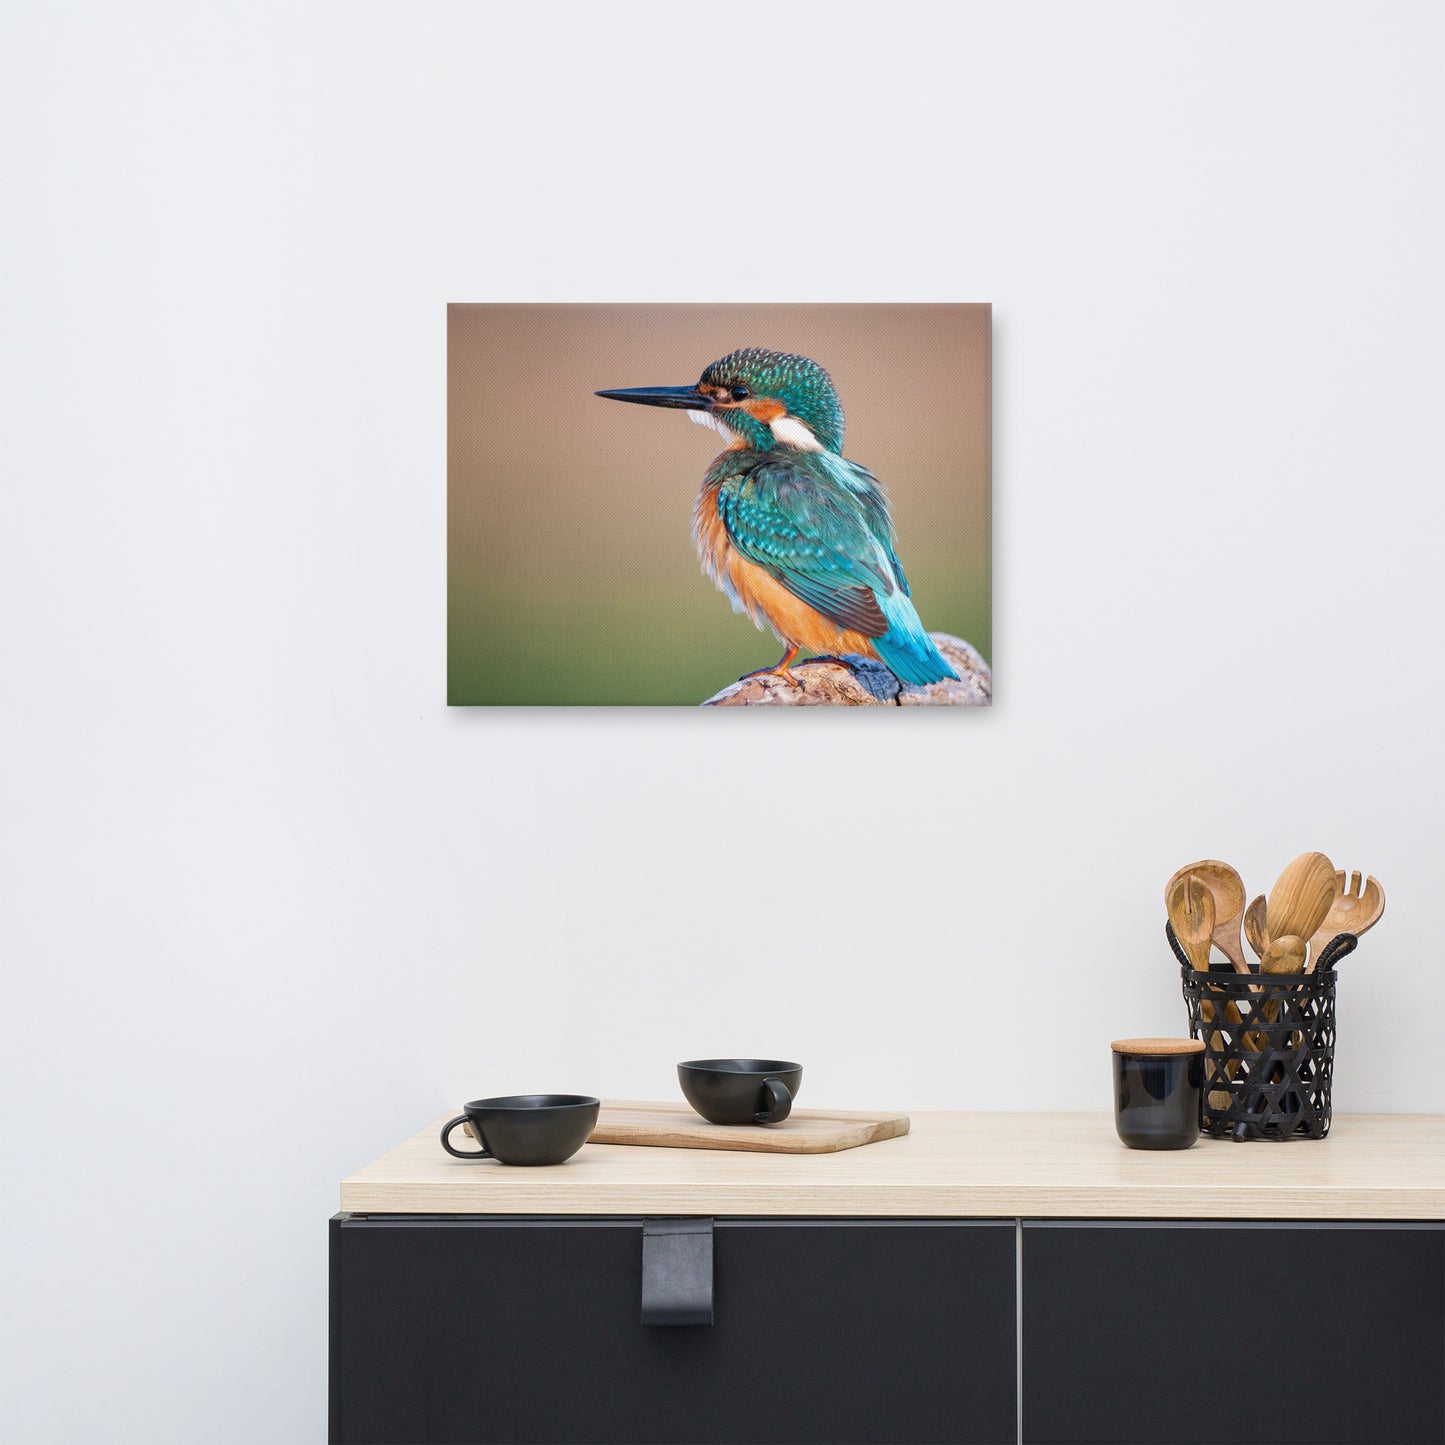 Common Kingfisher Bird on Perch Animal Wildlife Photograph Canvas Wall Art Prints